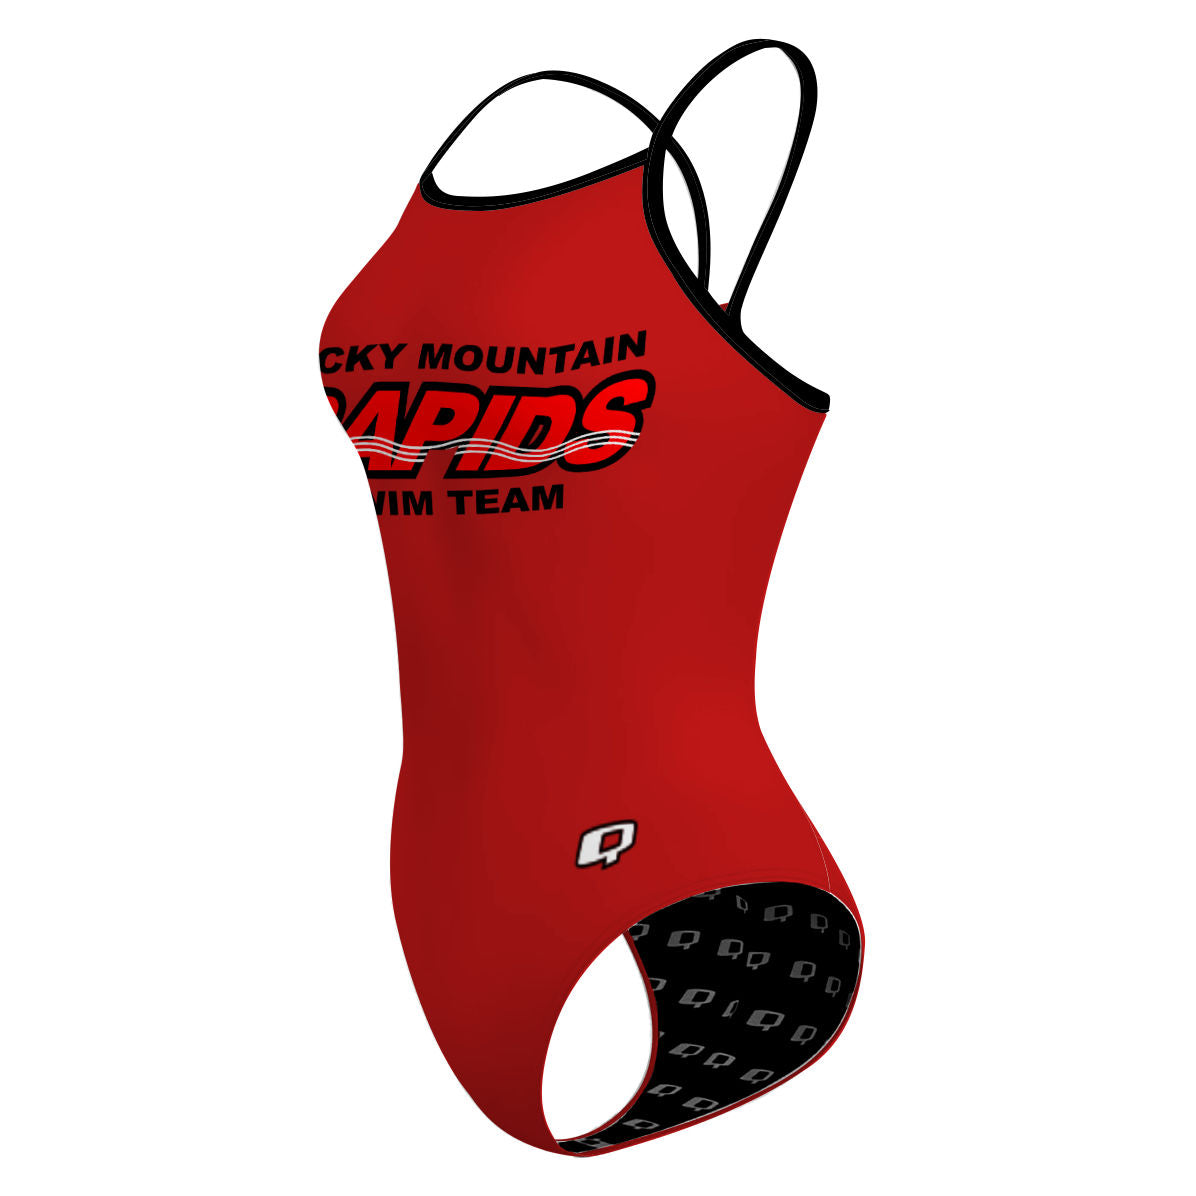 Rapids Original Logo - Skinny Strap Swimsuit